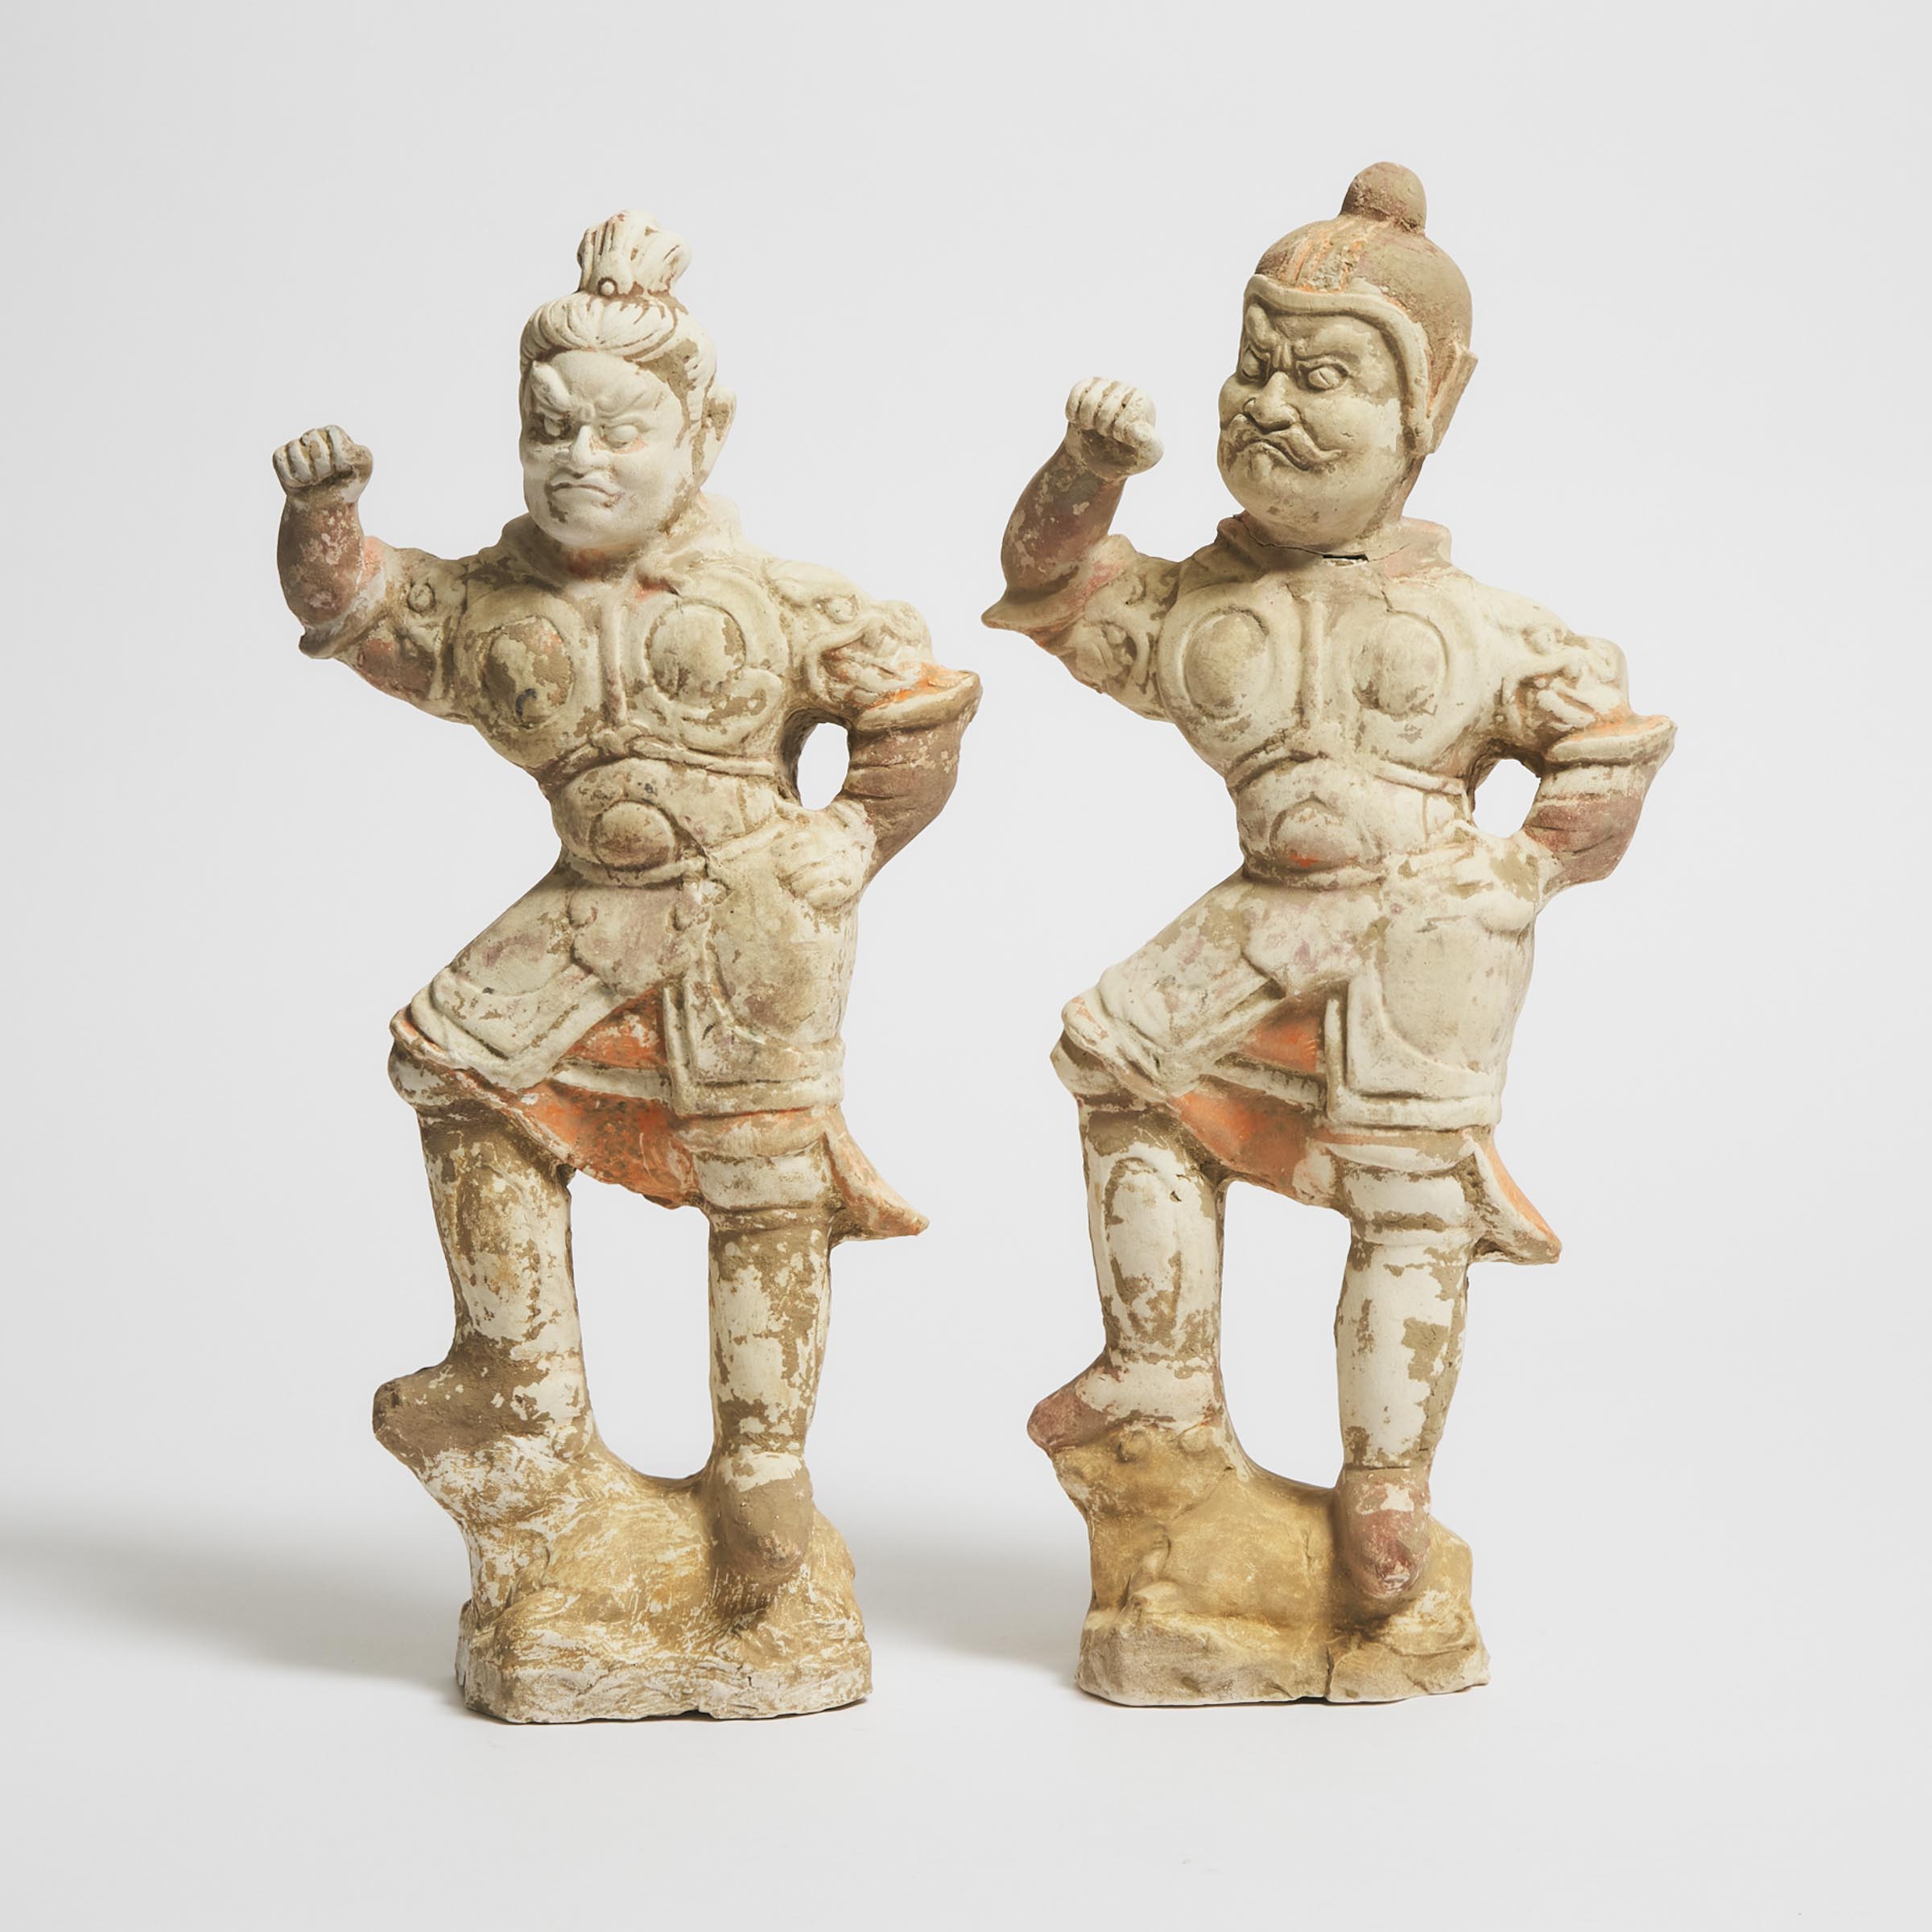 A Pair of Painted Pottery Lokapala Guardians, Han Dynasty (206 BC-AD 220)